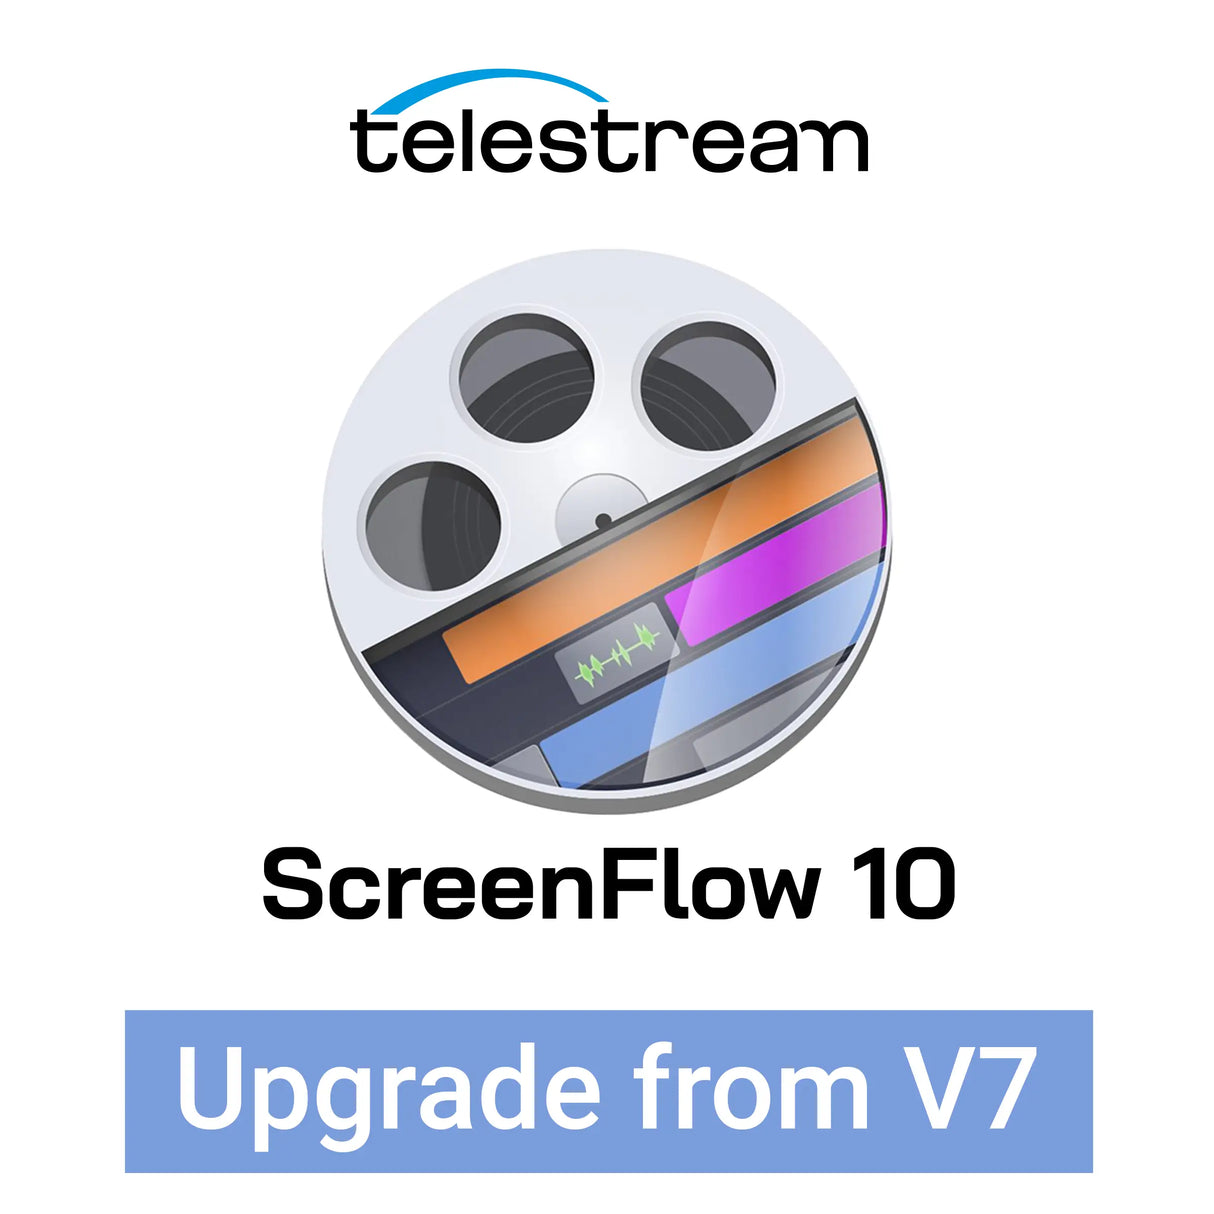 Telestream ScreenFlow 10 Video Editing Software Upgrade from V7